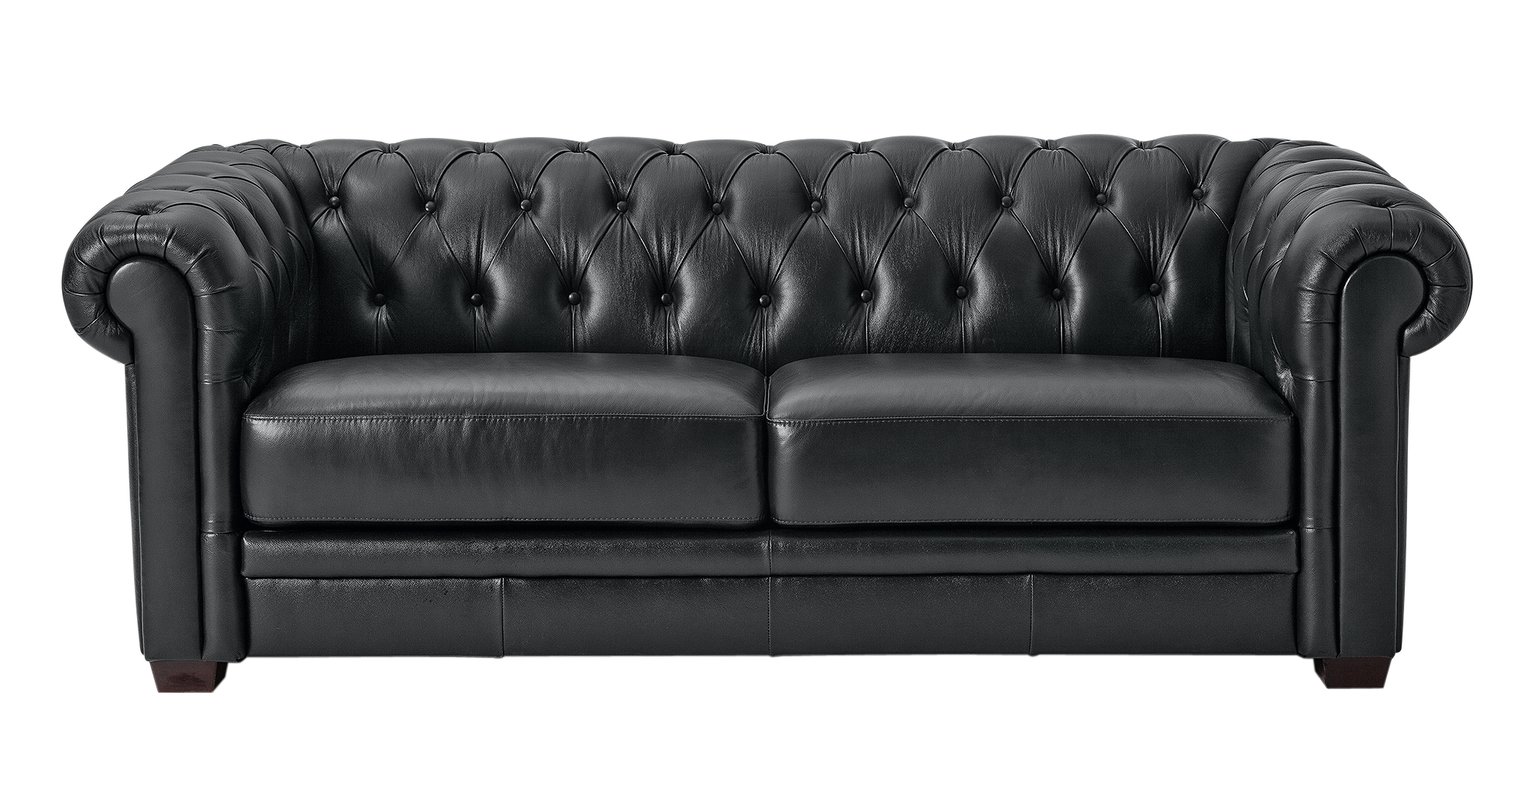 Habitat Chesterfield 3 Seater Leather Sofa - Black